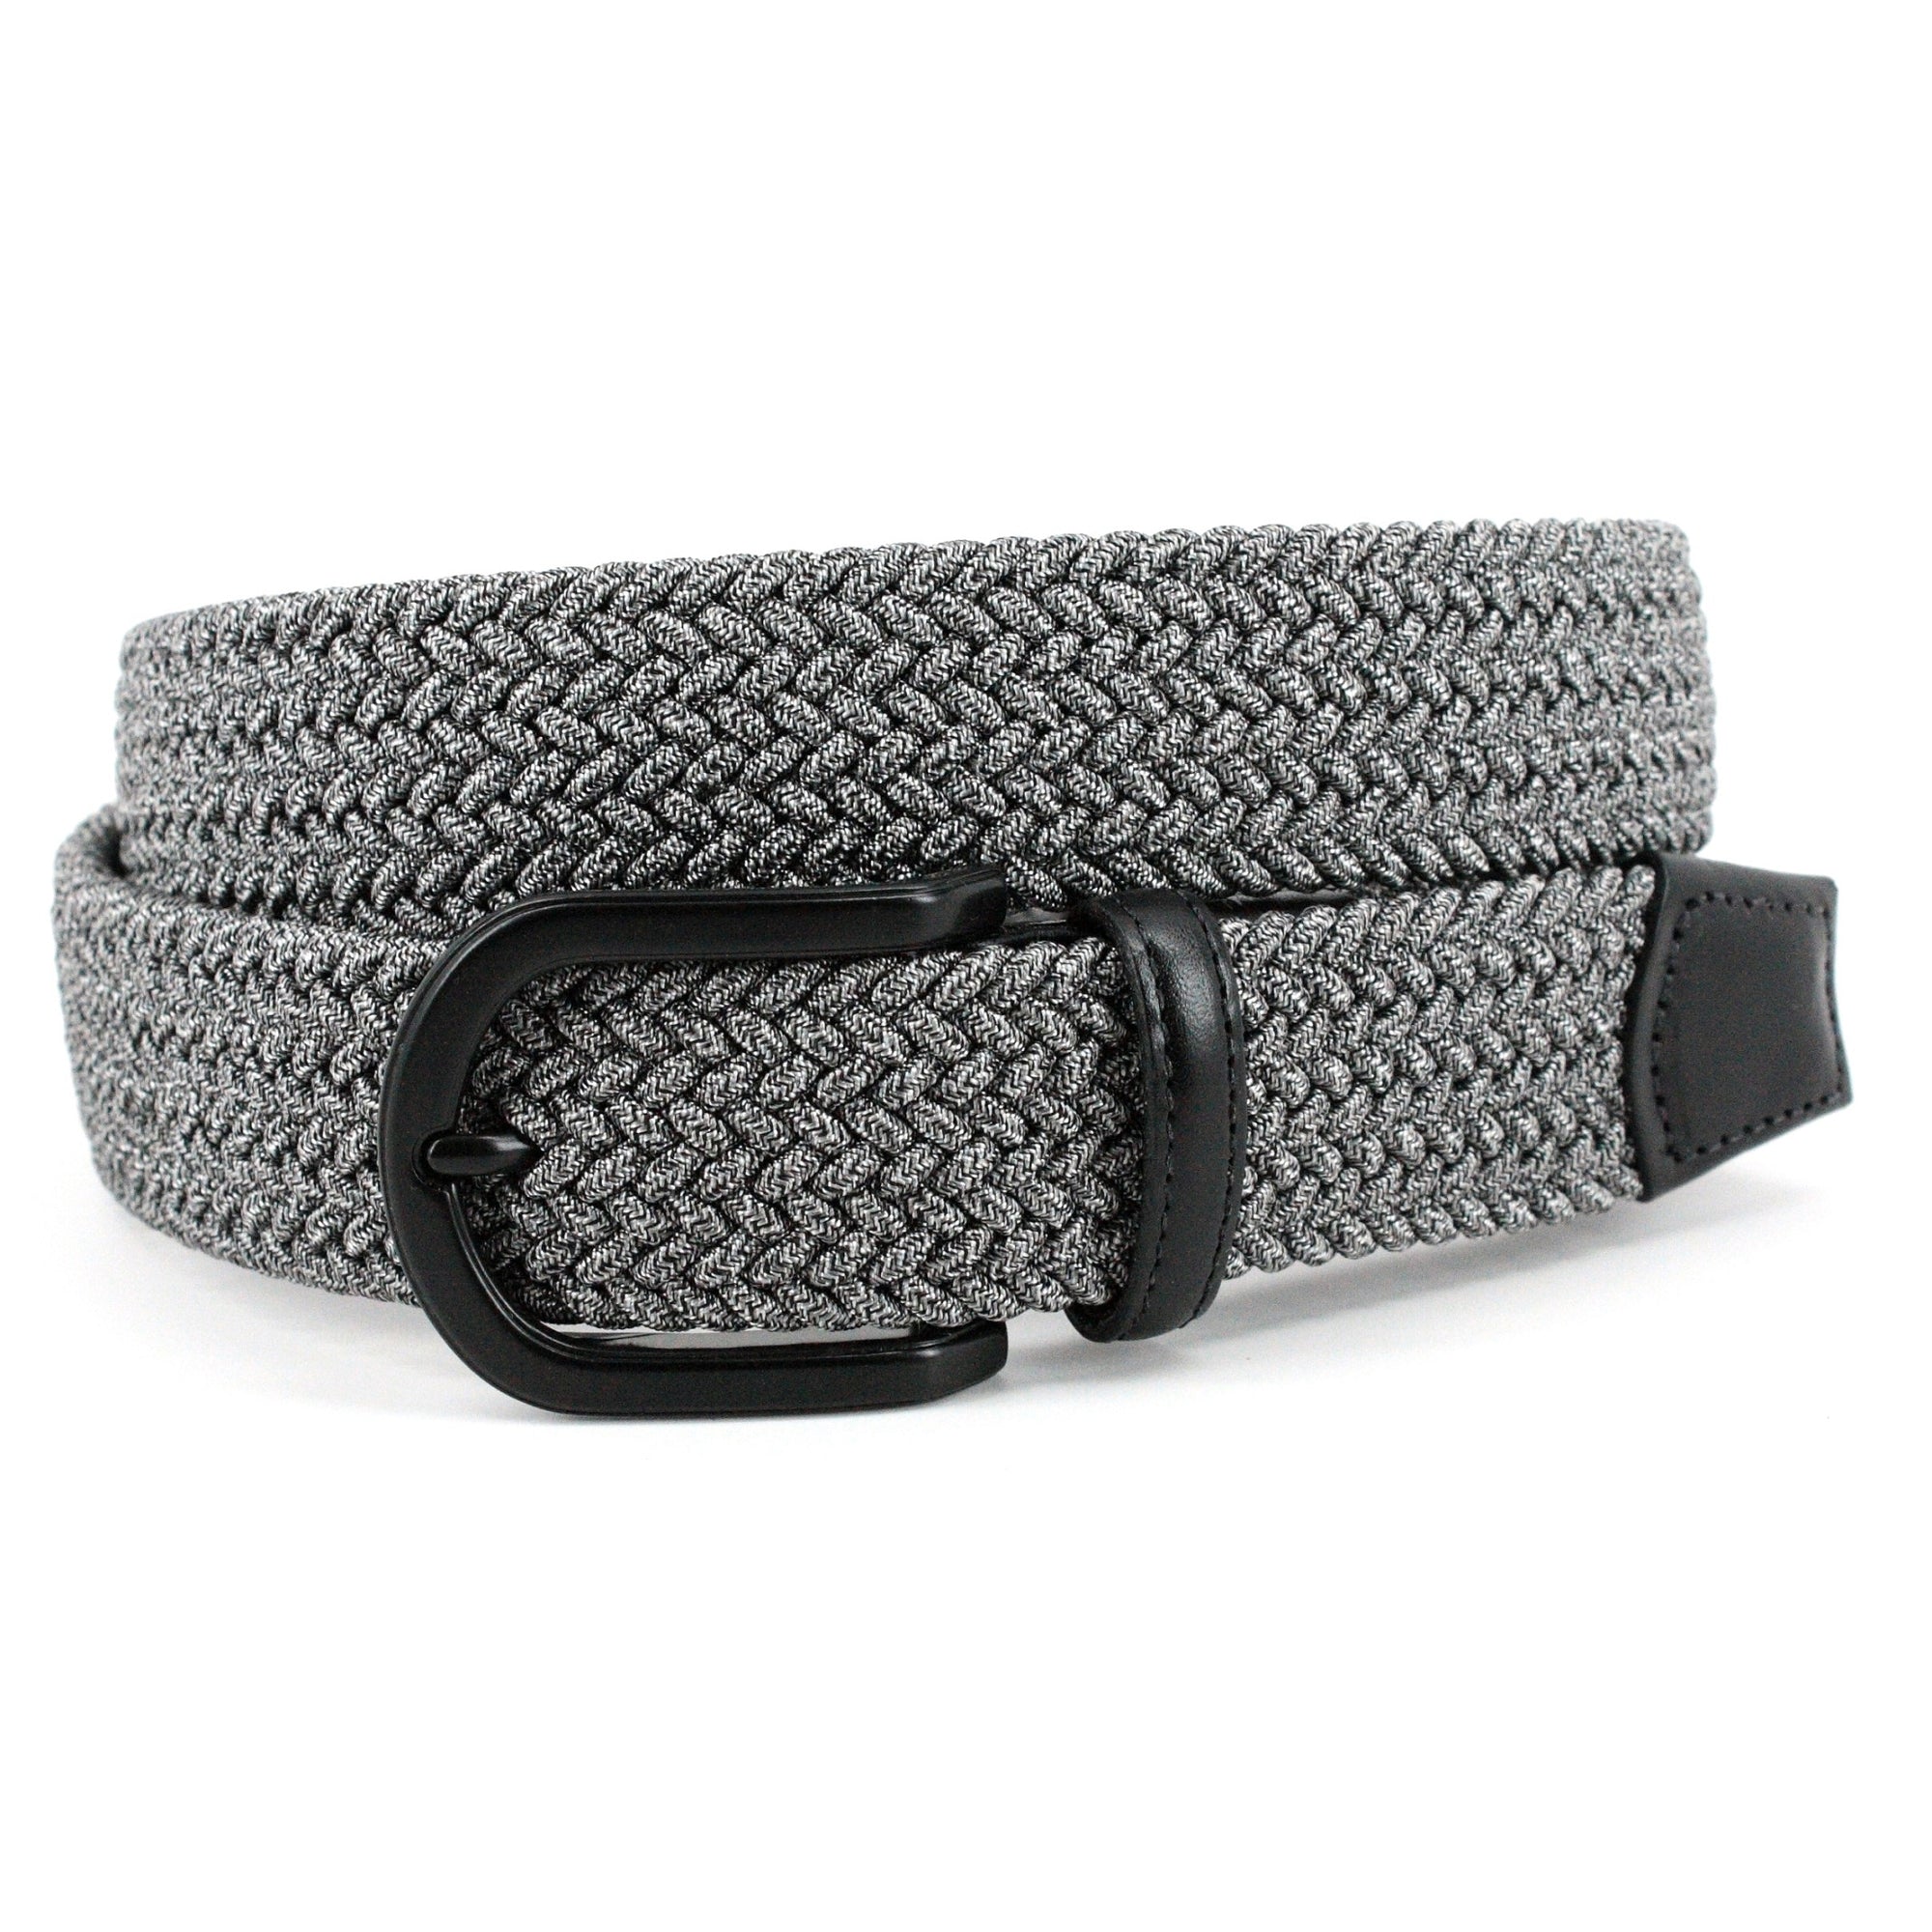 Italian Braided Melange Rayon Elastic Belt in Grey by Torino Leather